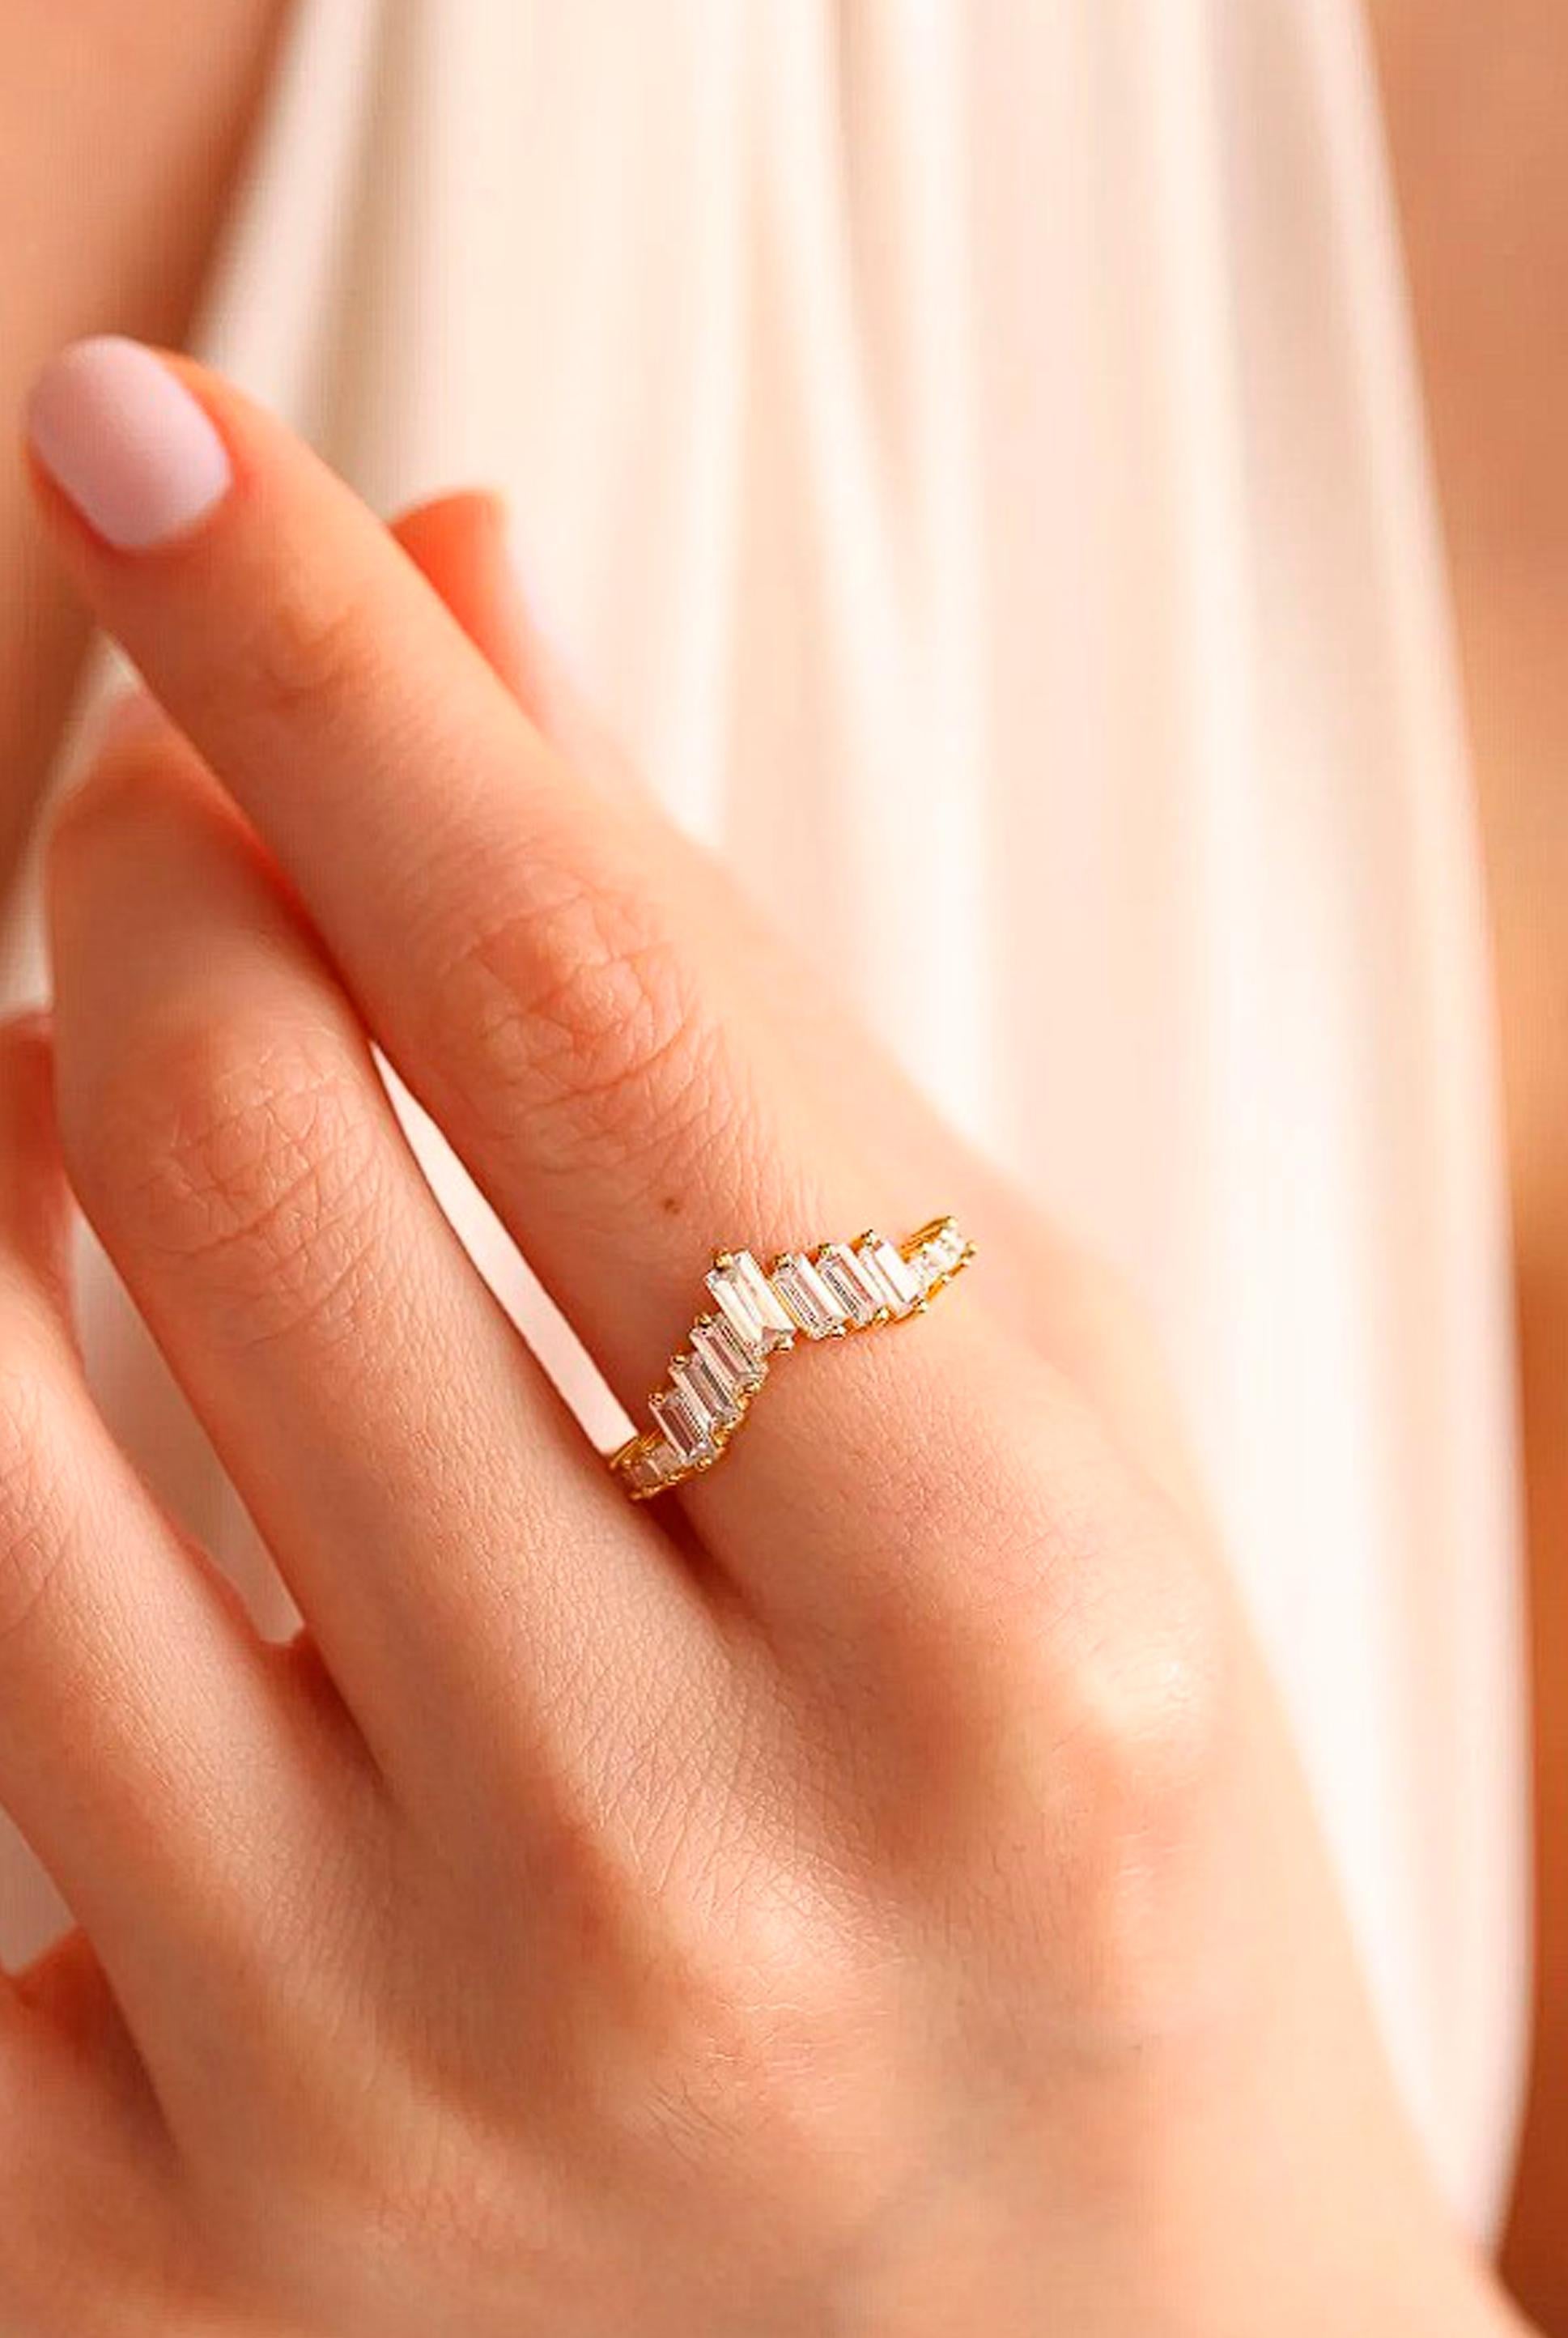 For Sale:  Baguette cut moissanite 14k gold engagement ring. 4